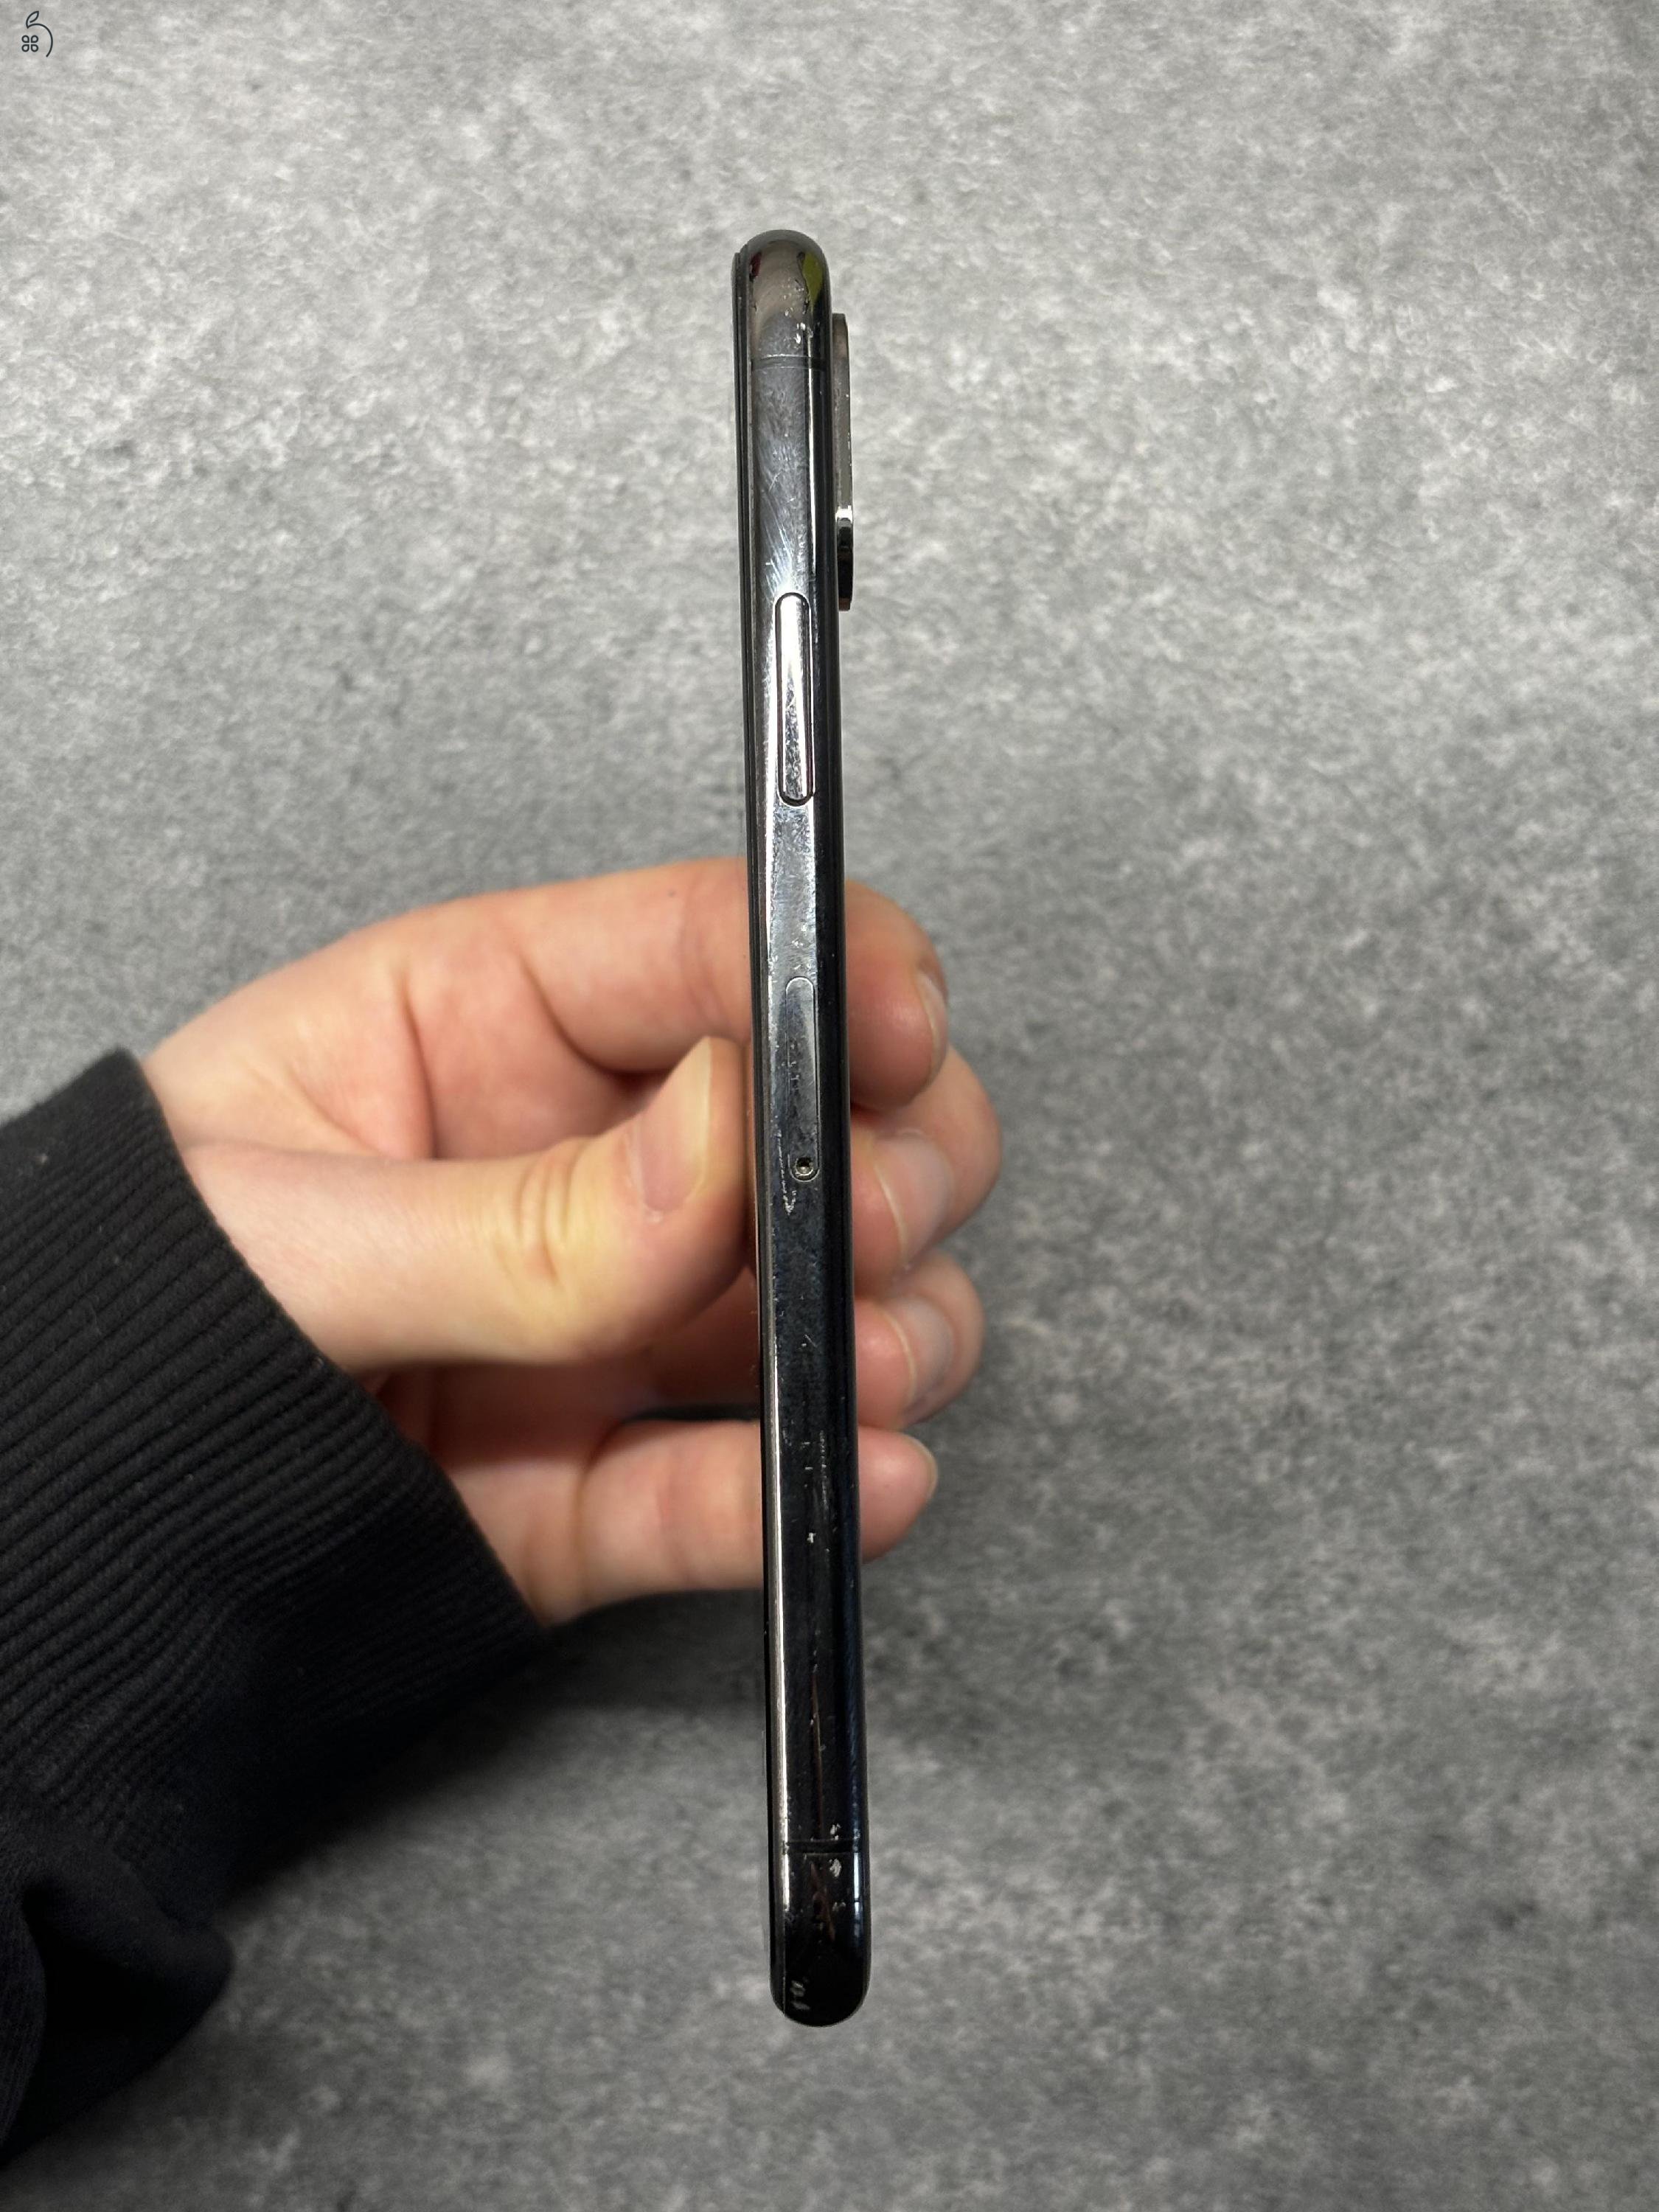 iPhone XS - 256 GB - Space Gray - kártyafüggetlen